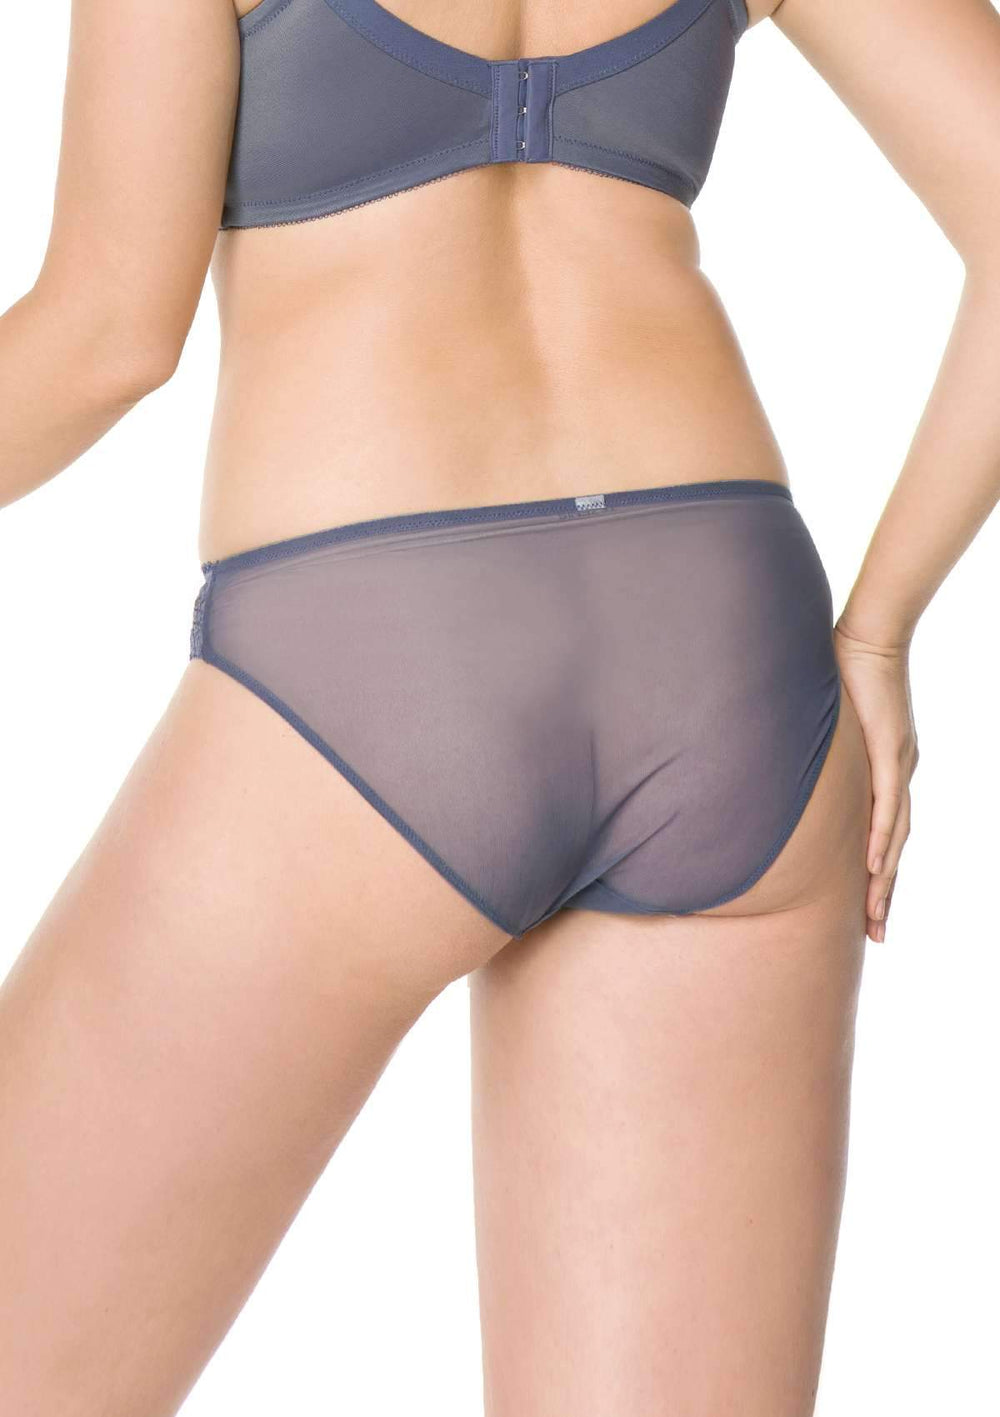 3-Pack Nylon Panties